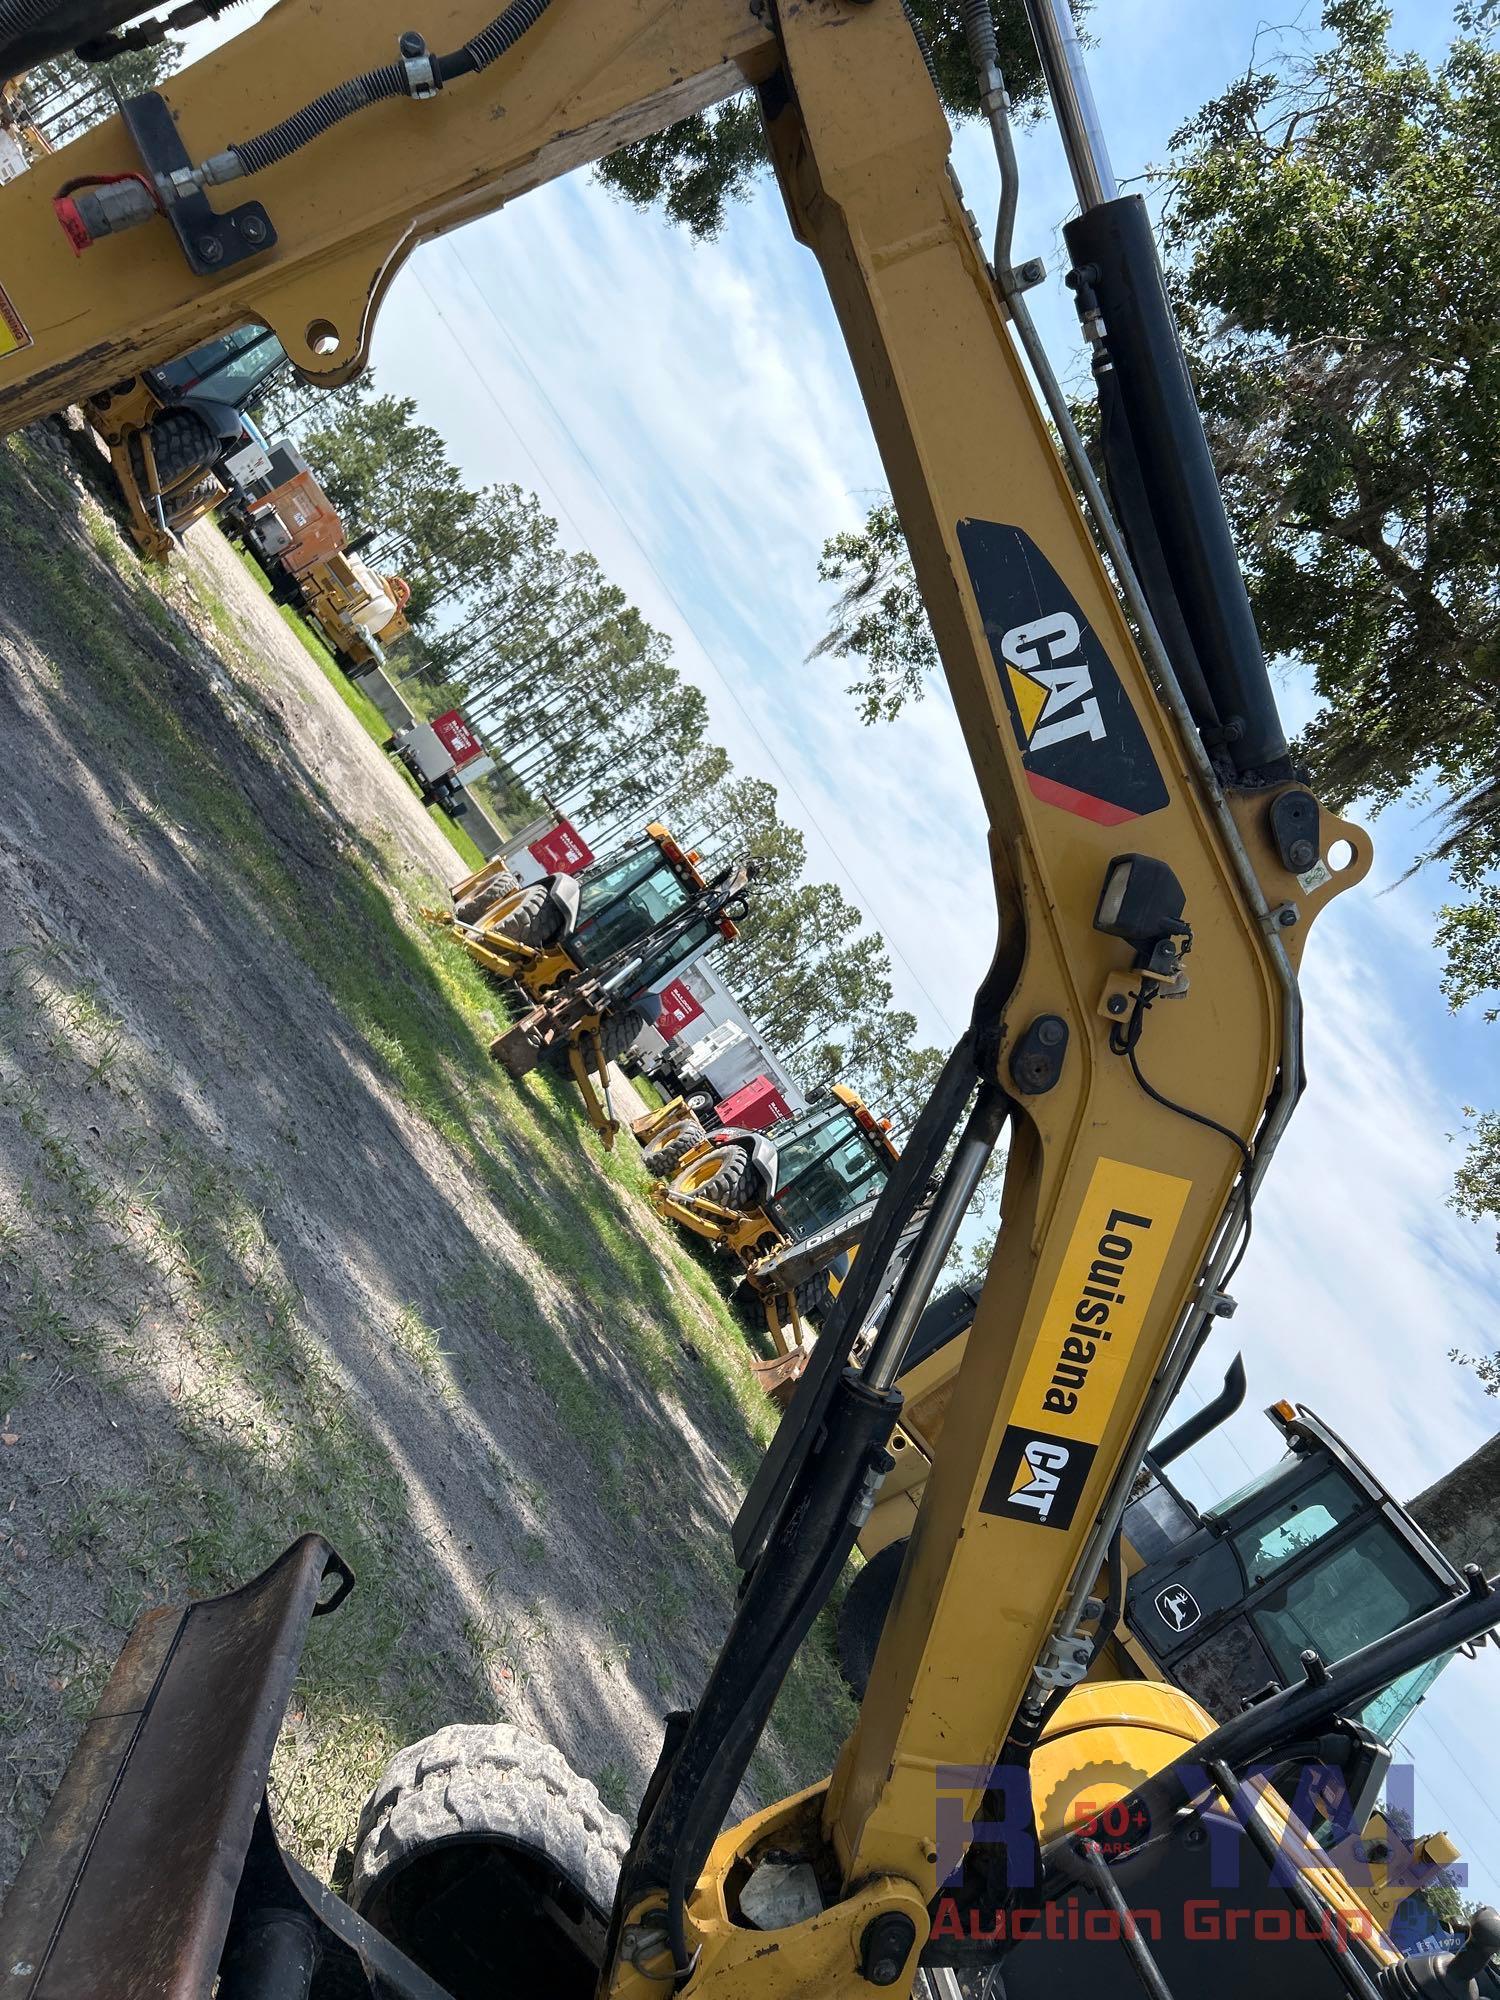 2019 Caterpillar 303.5E2 CR Hydraulic Mini Excavator